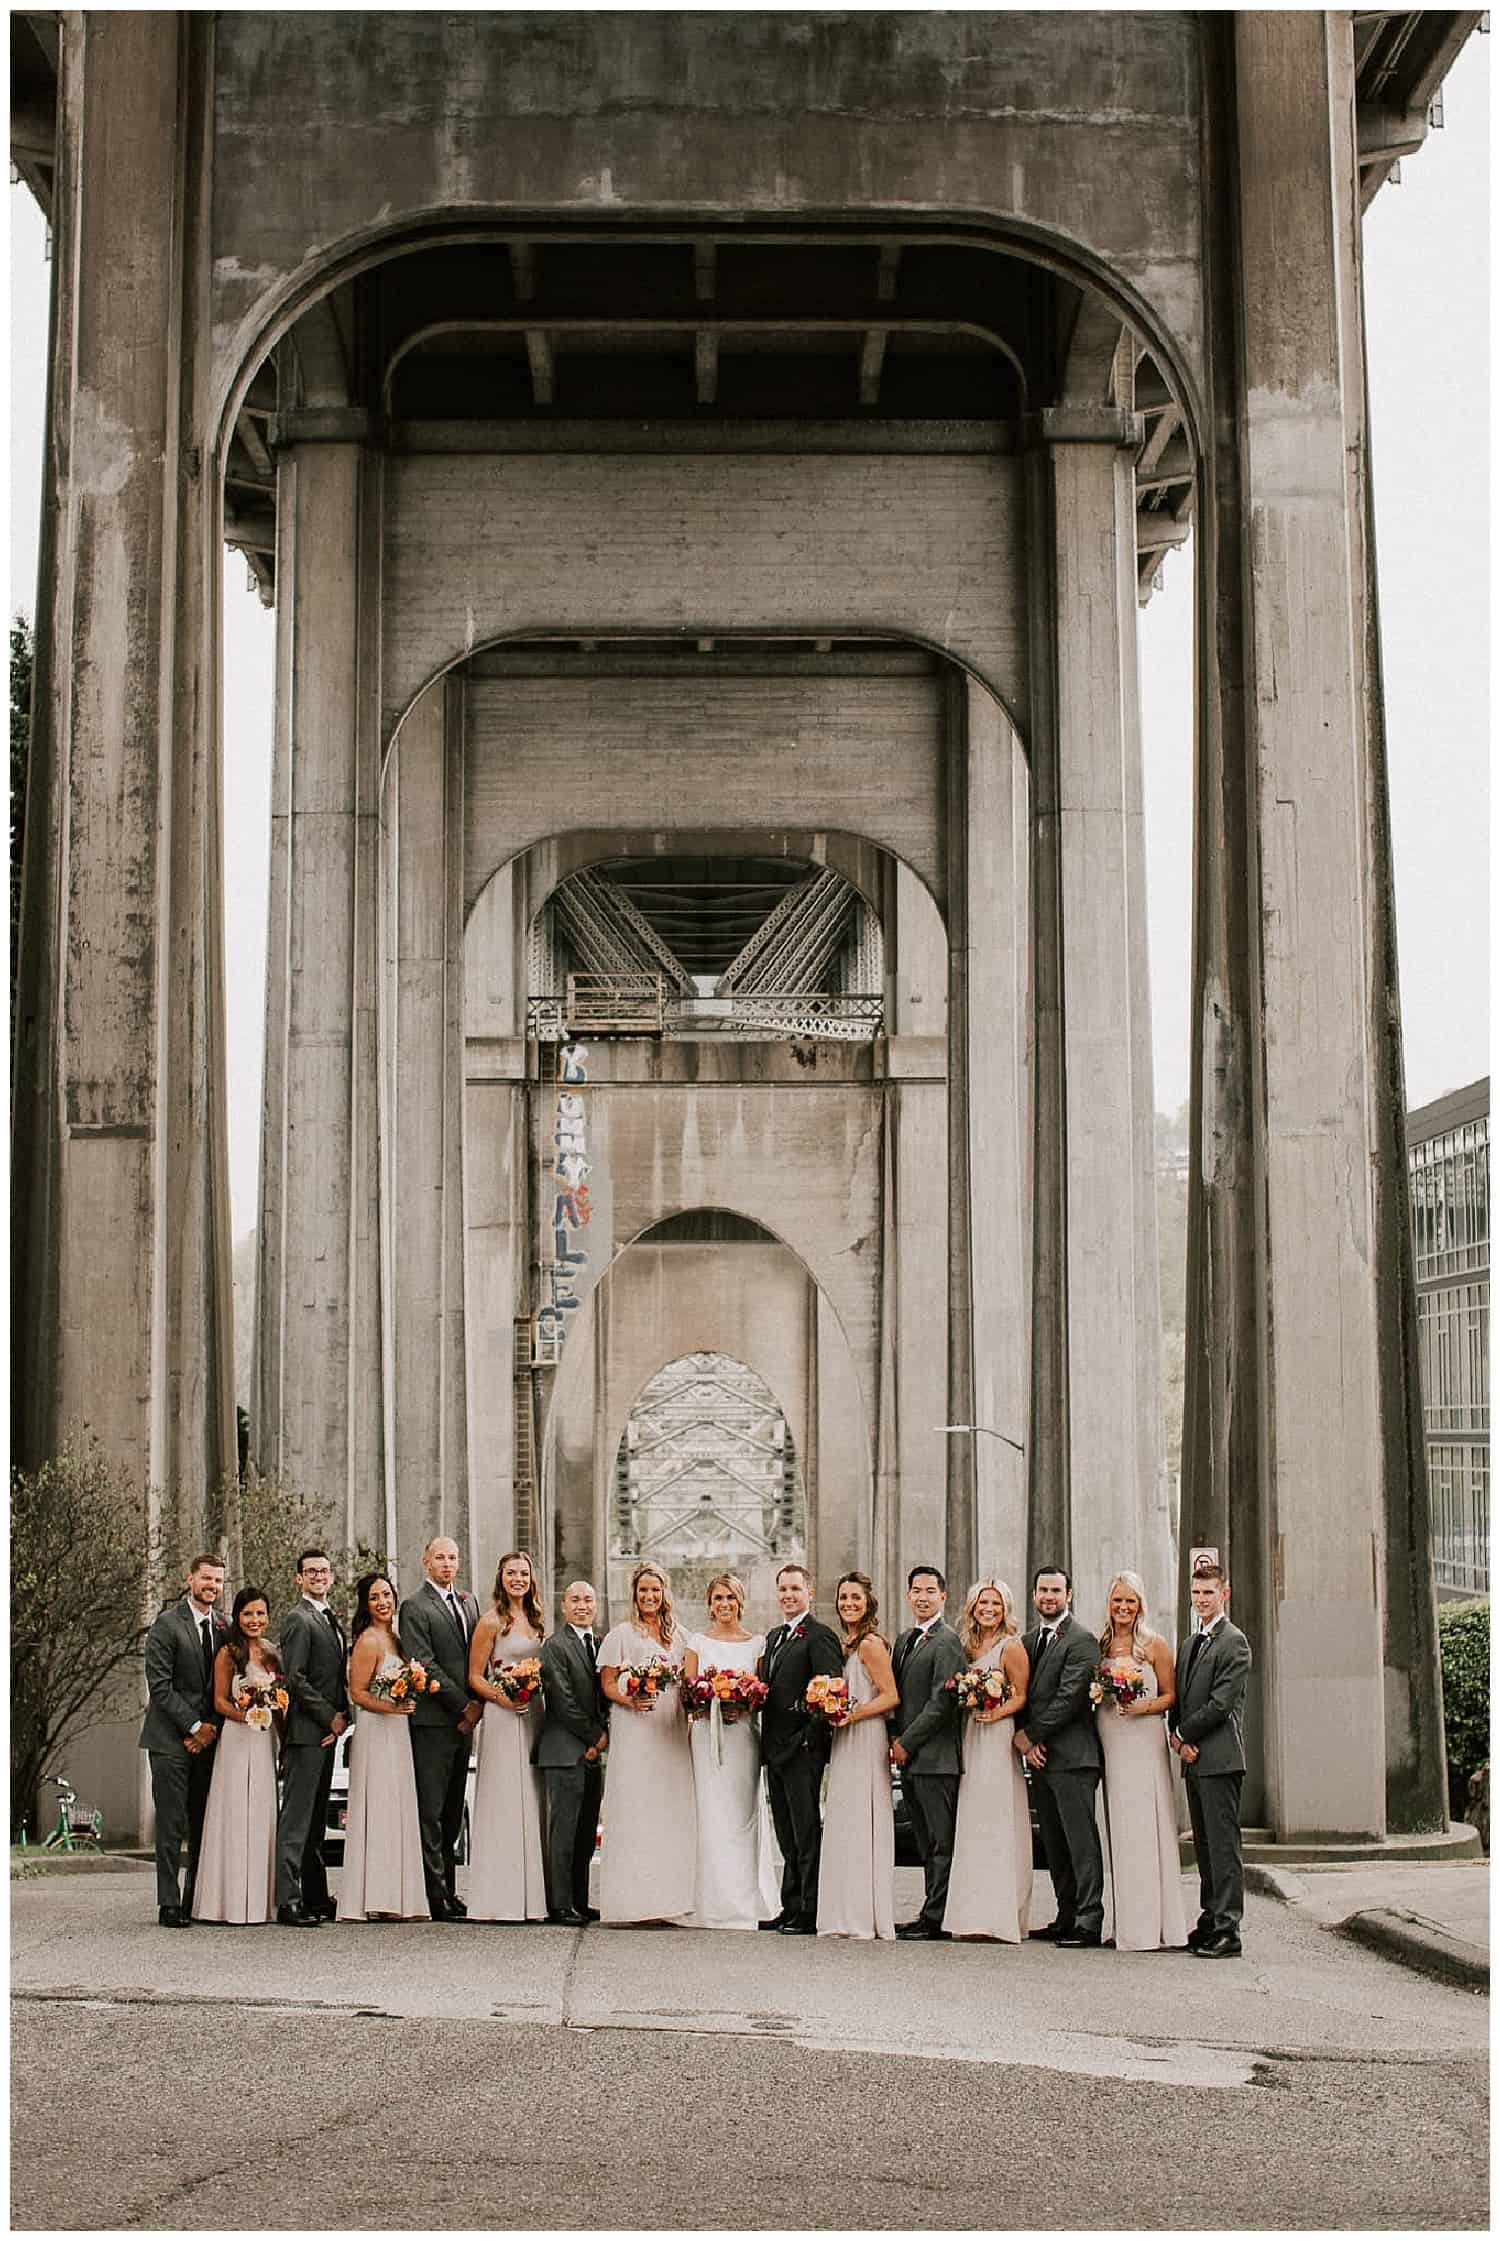 Fremont Bridge wedding photos by Kyle Goldie of Luma Weddings